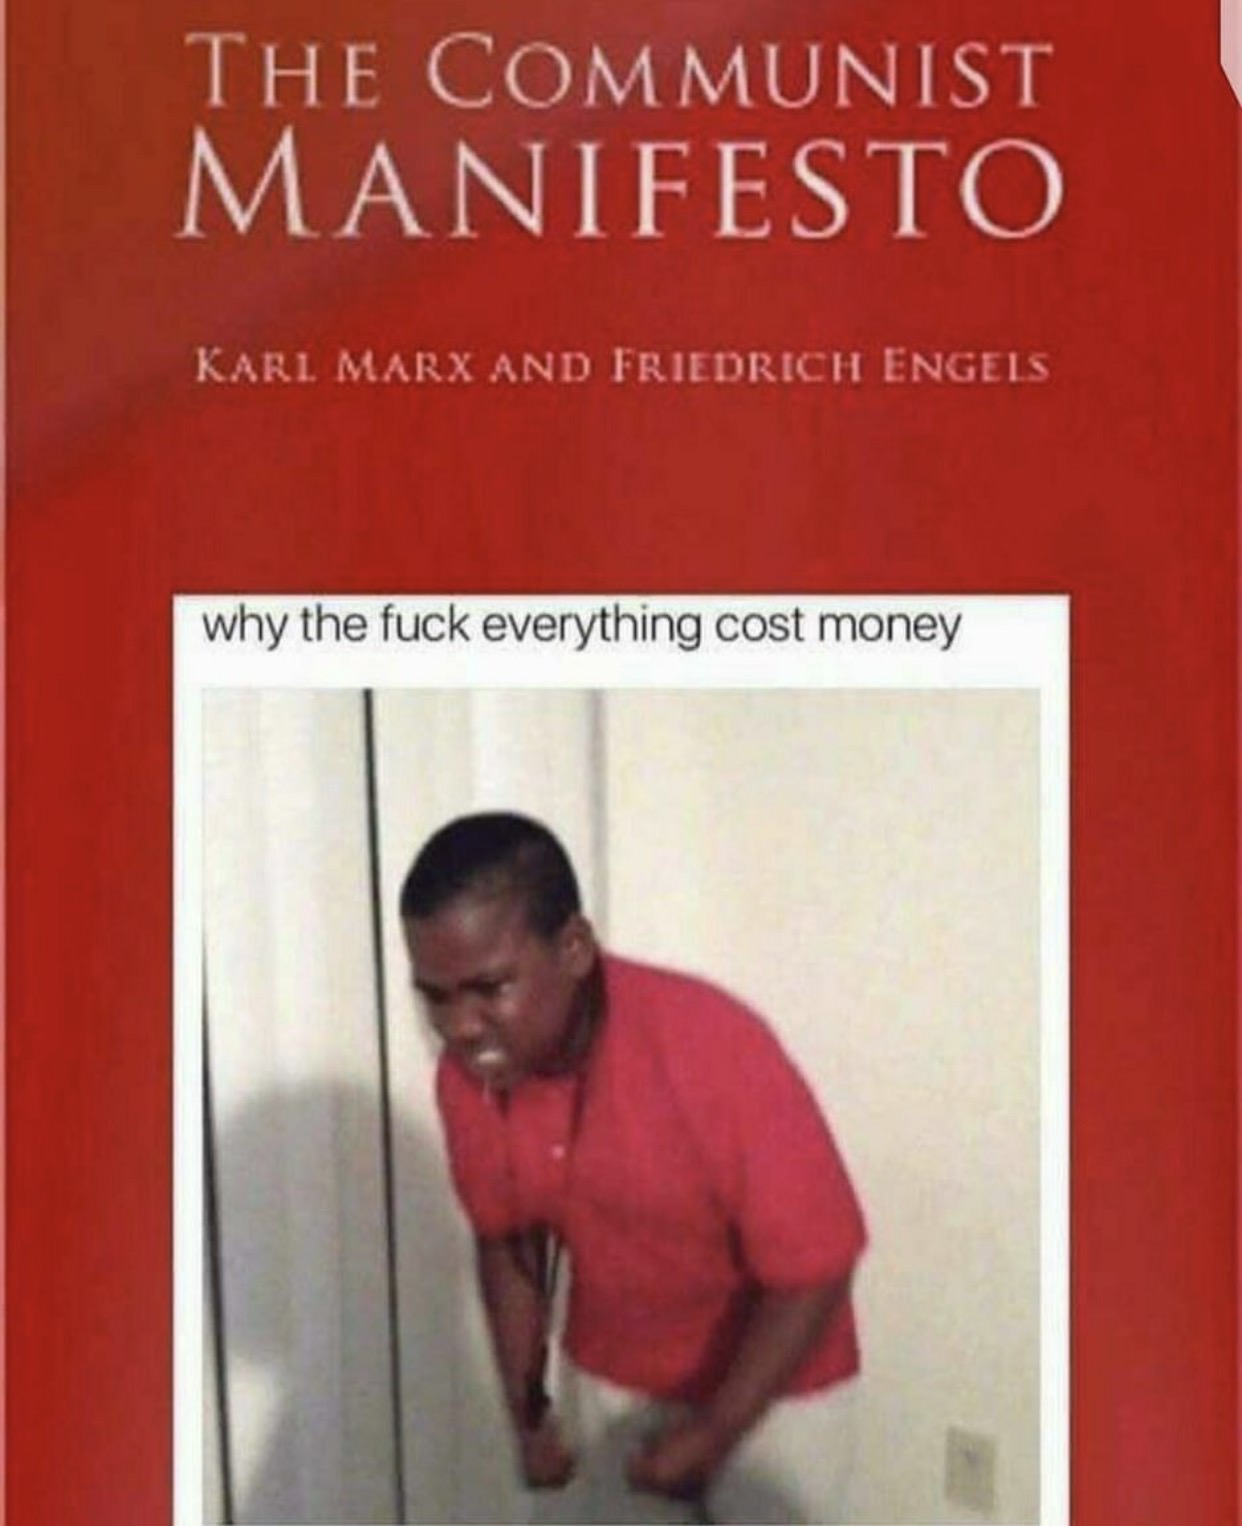 Offensive meme of the communist manifesto